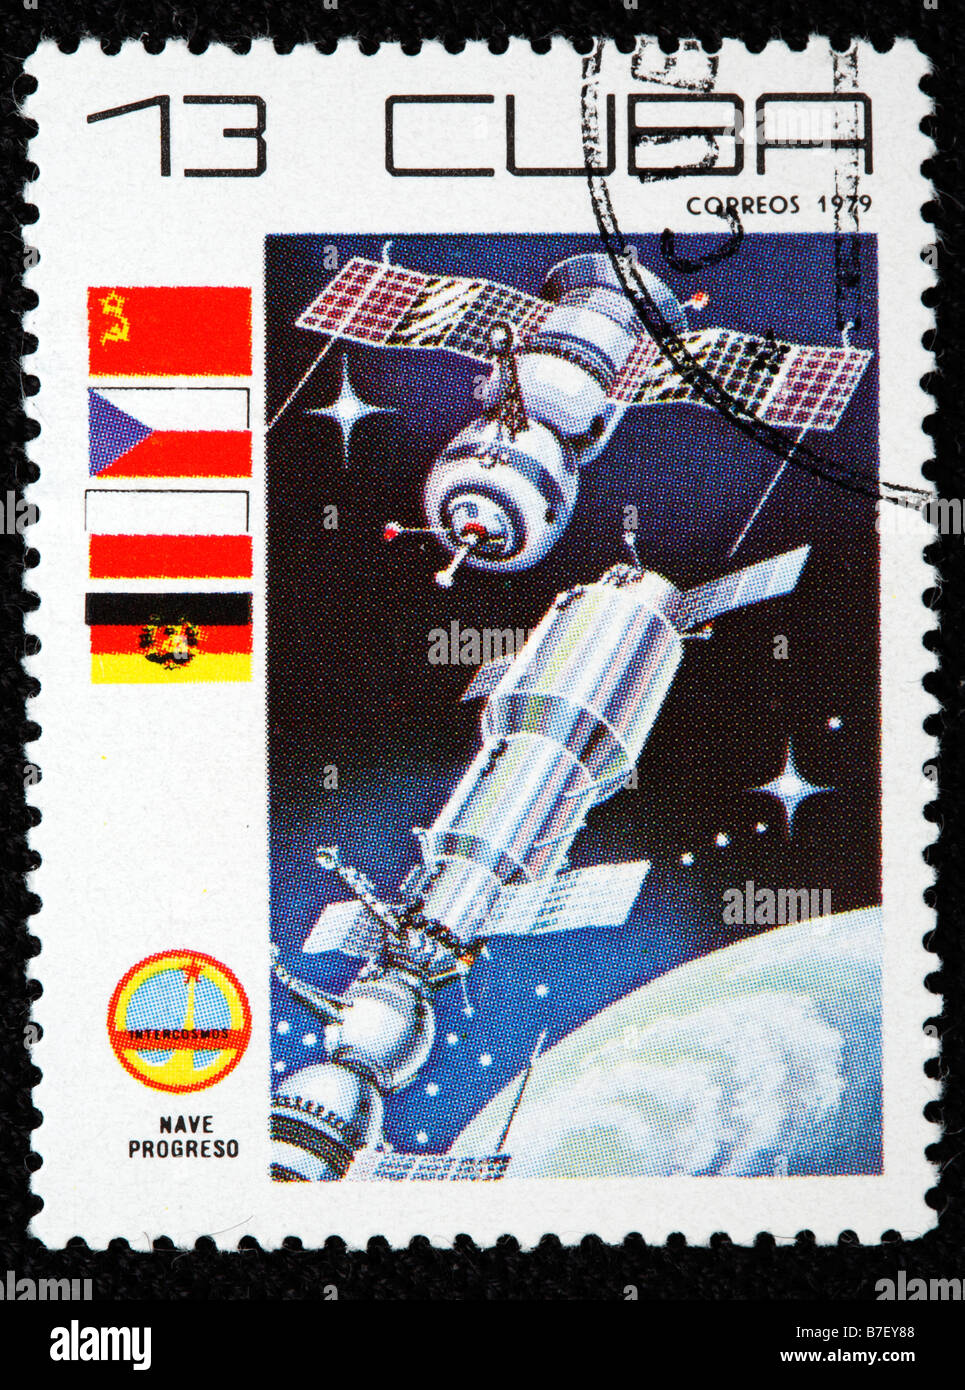 Sowjetischen Raum Orbitalstation "Progress", Briefmarke, Kuba, 1979 Stockfoto